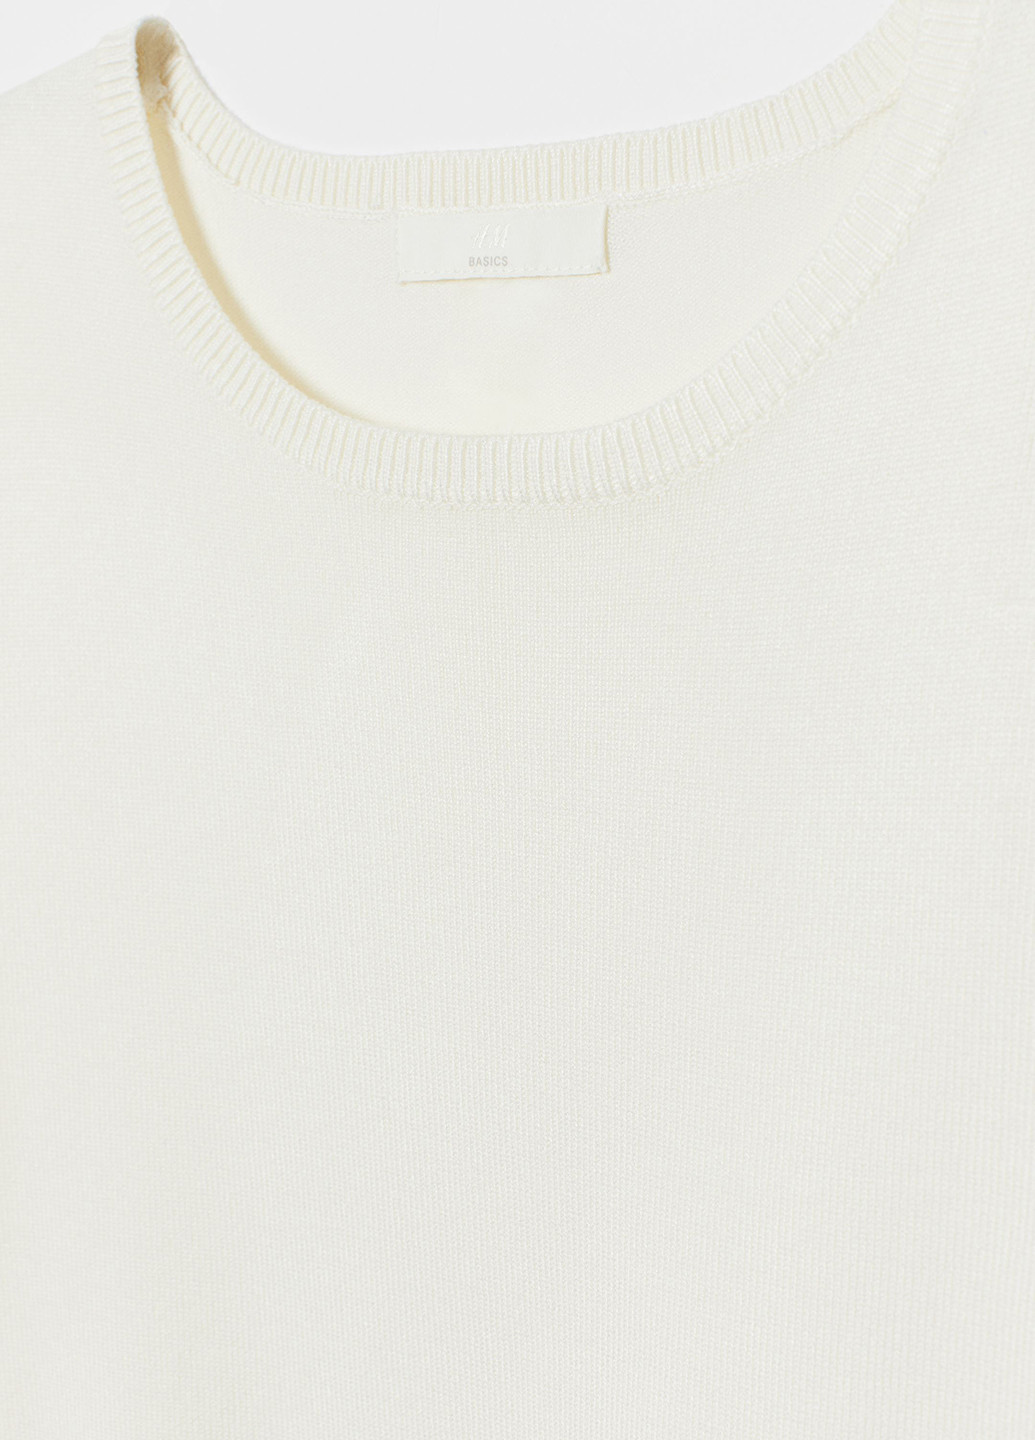 Белый летний джемпер джемпер H&M